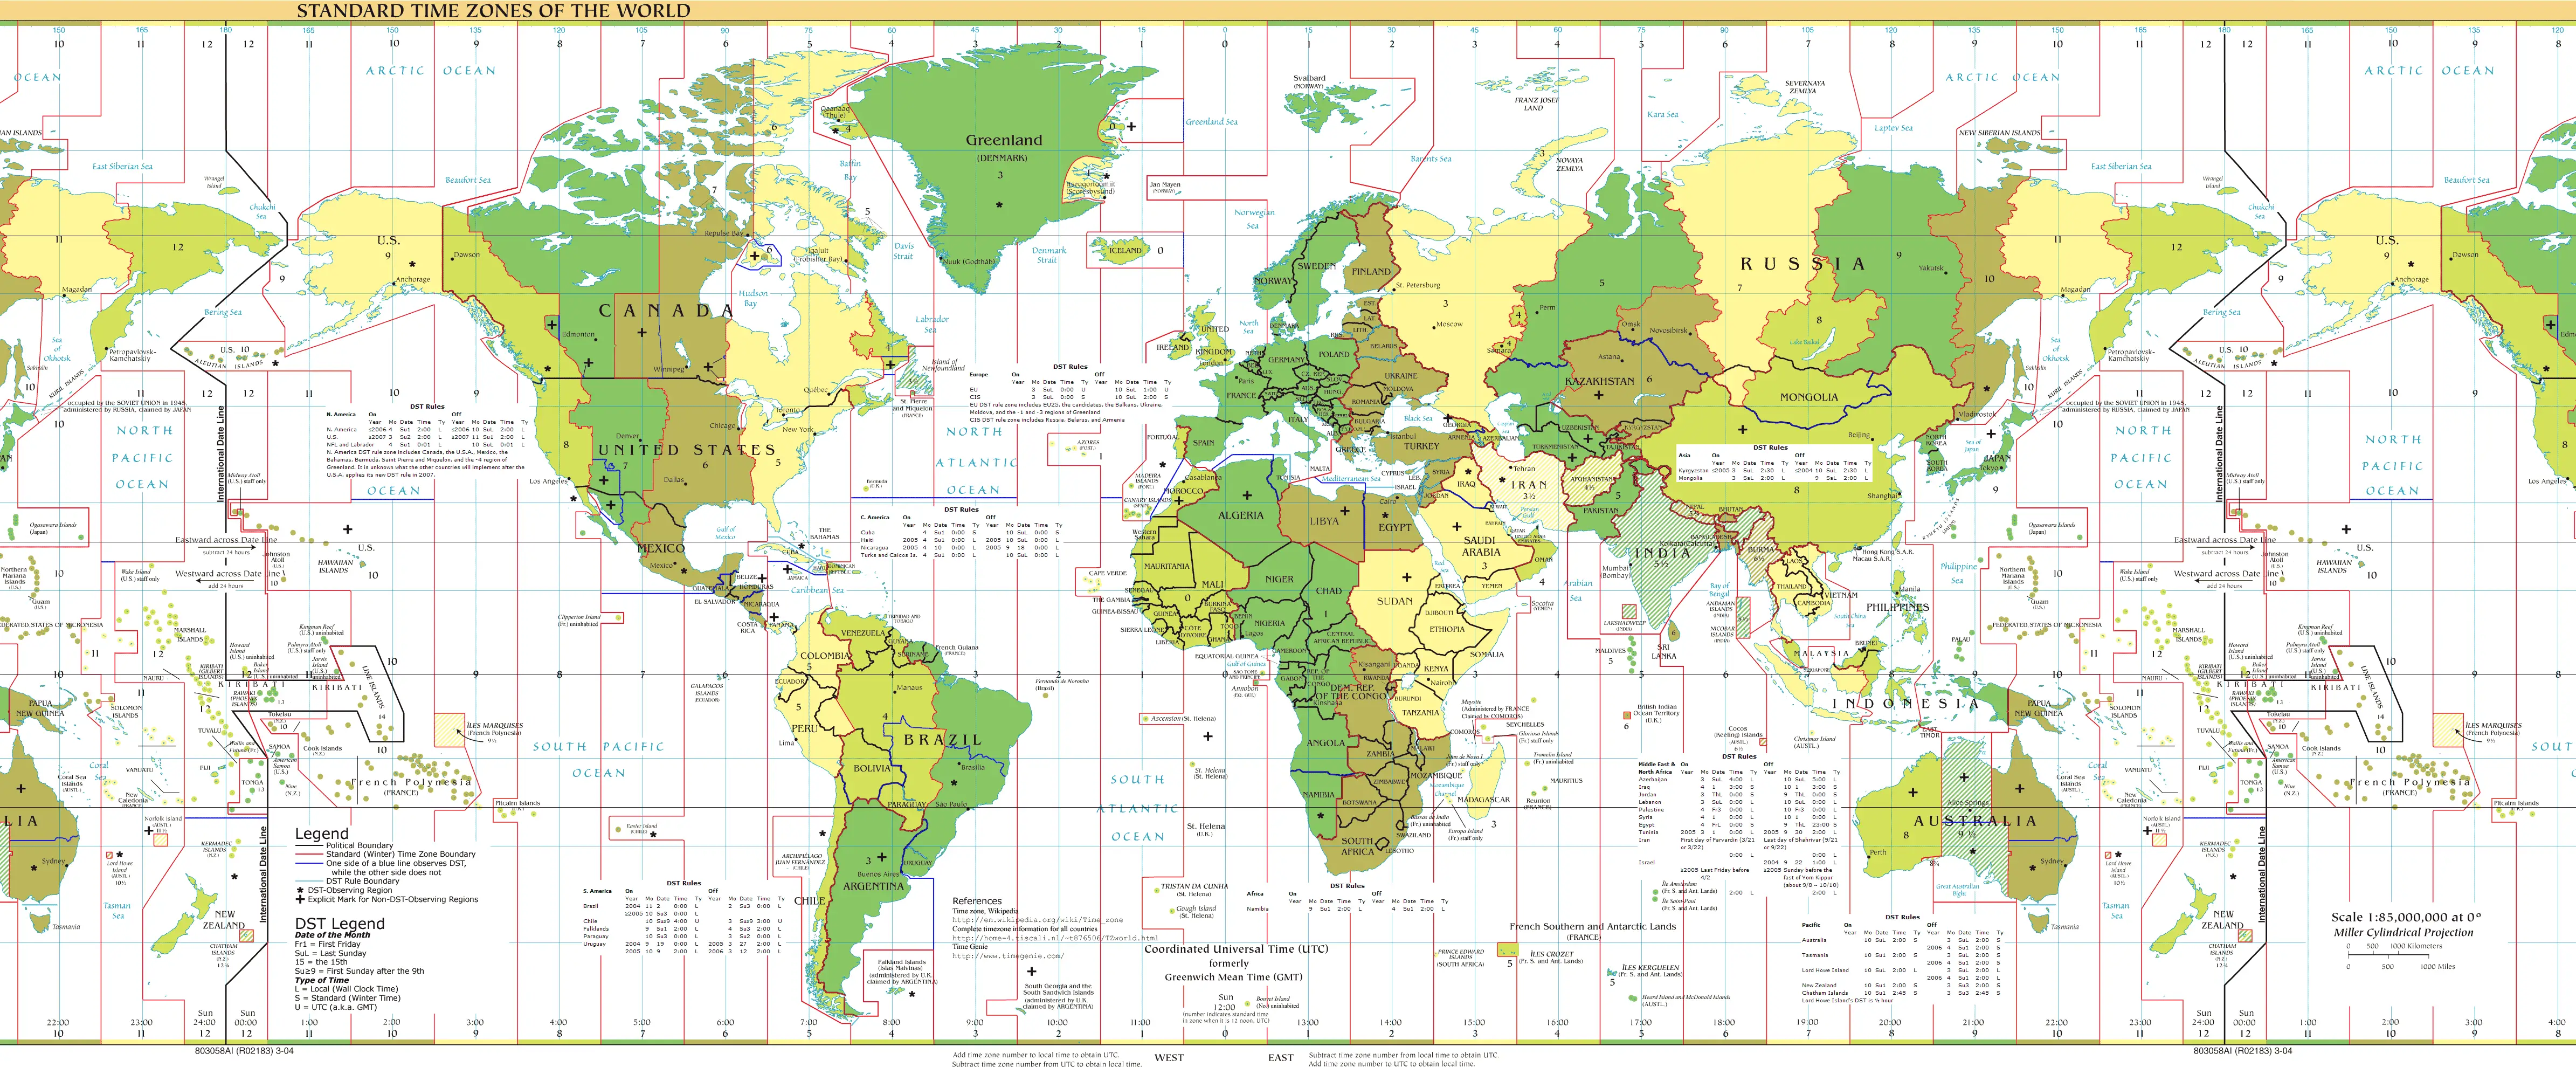 Standard Timezones of the World